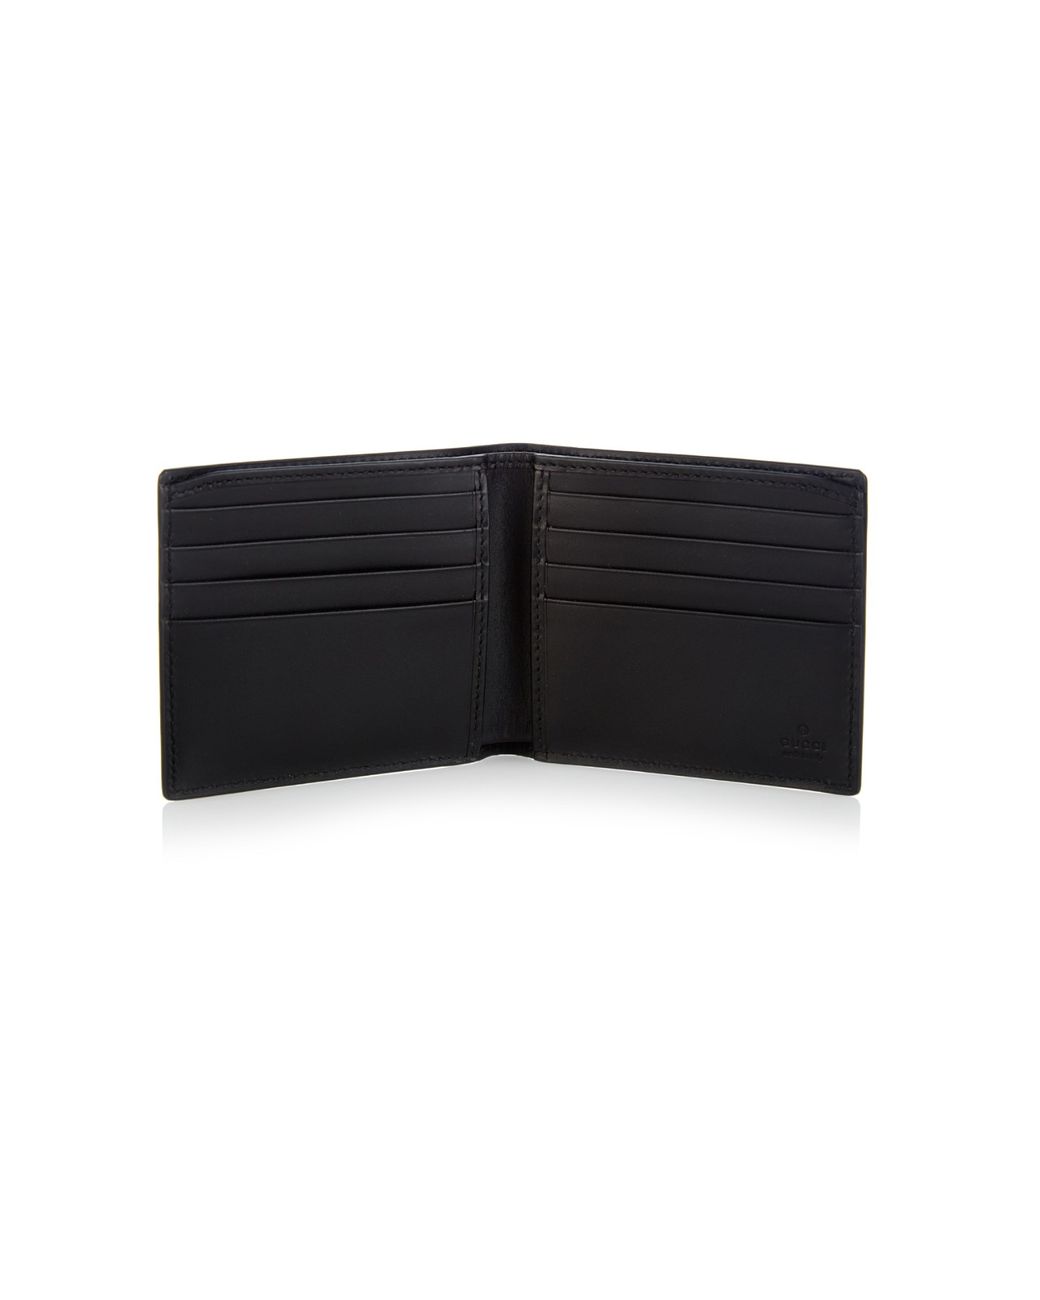 Gucci Web Stripe Leather Wallet in Black for Men | Lyst